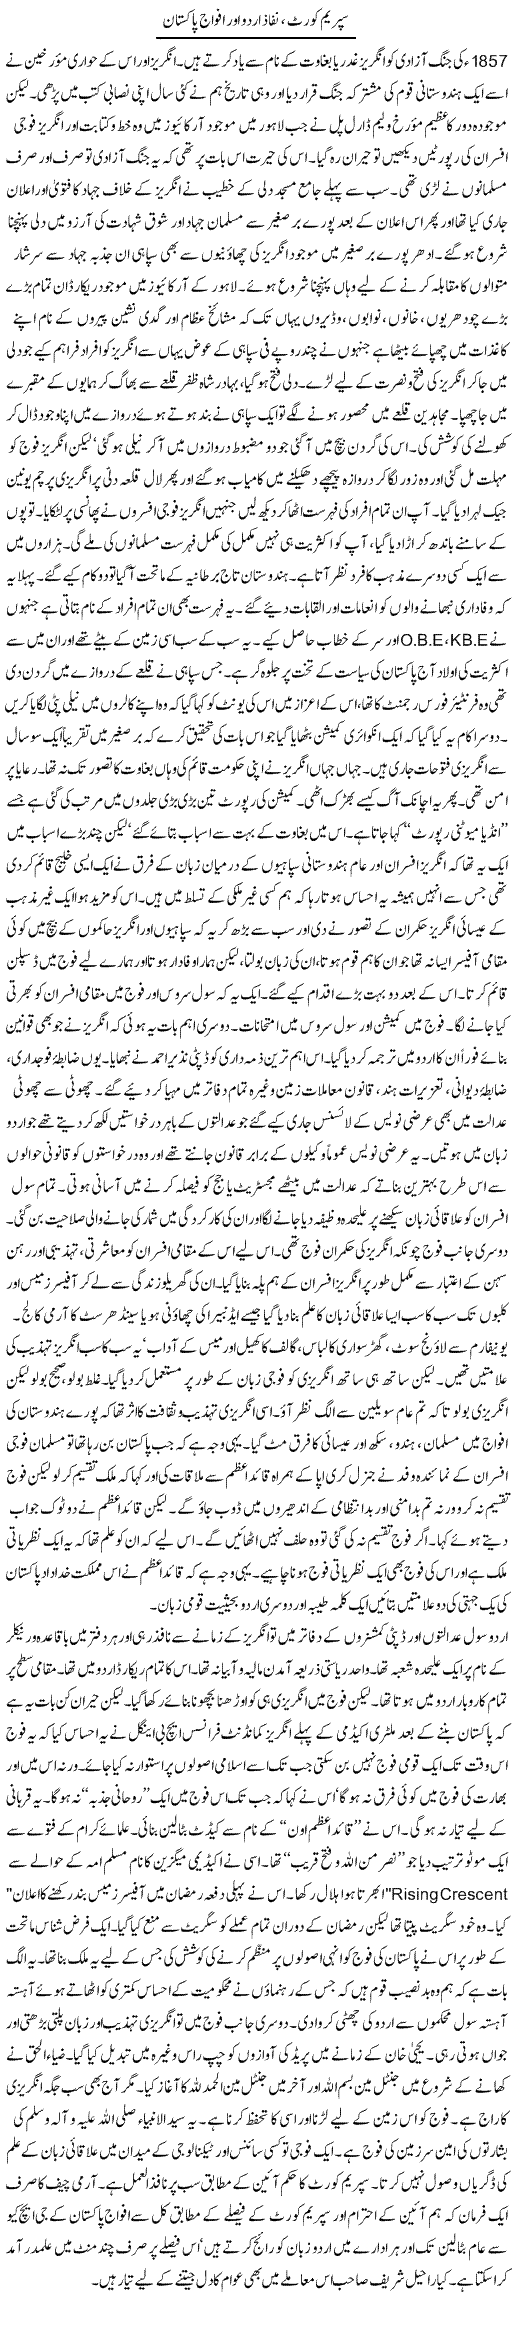 Supreme Court, Nifaz Urdu Aur Afwaj Pakistan | Orya Maqbool Jan | Daily Urdu Columns